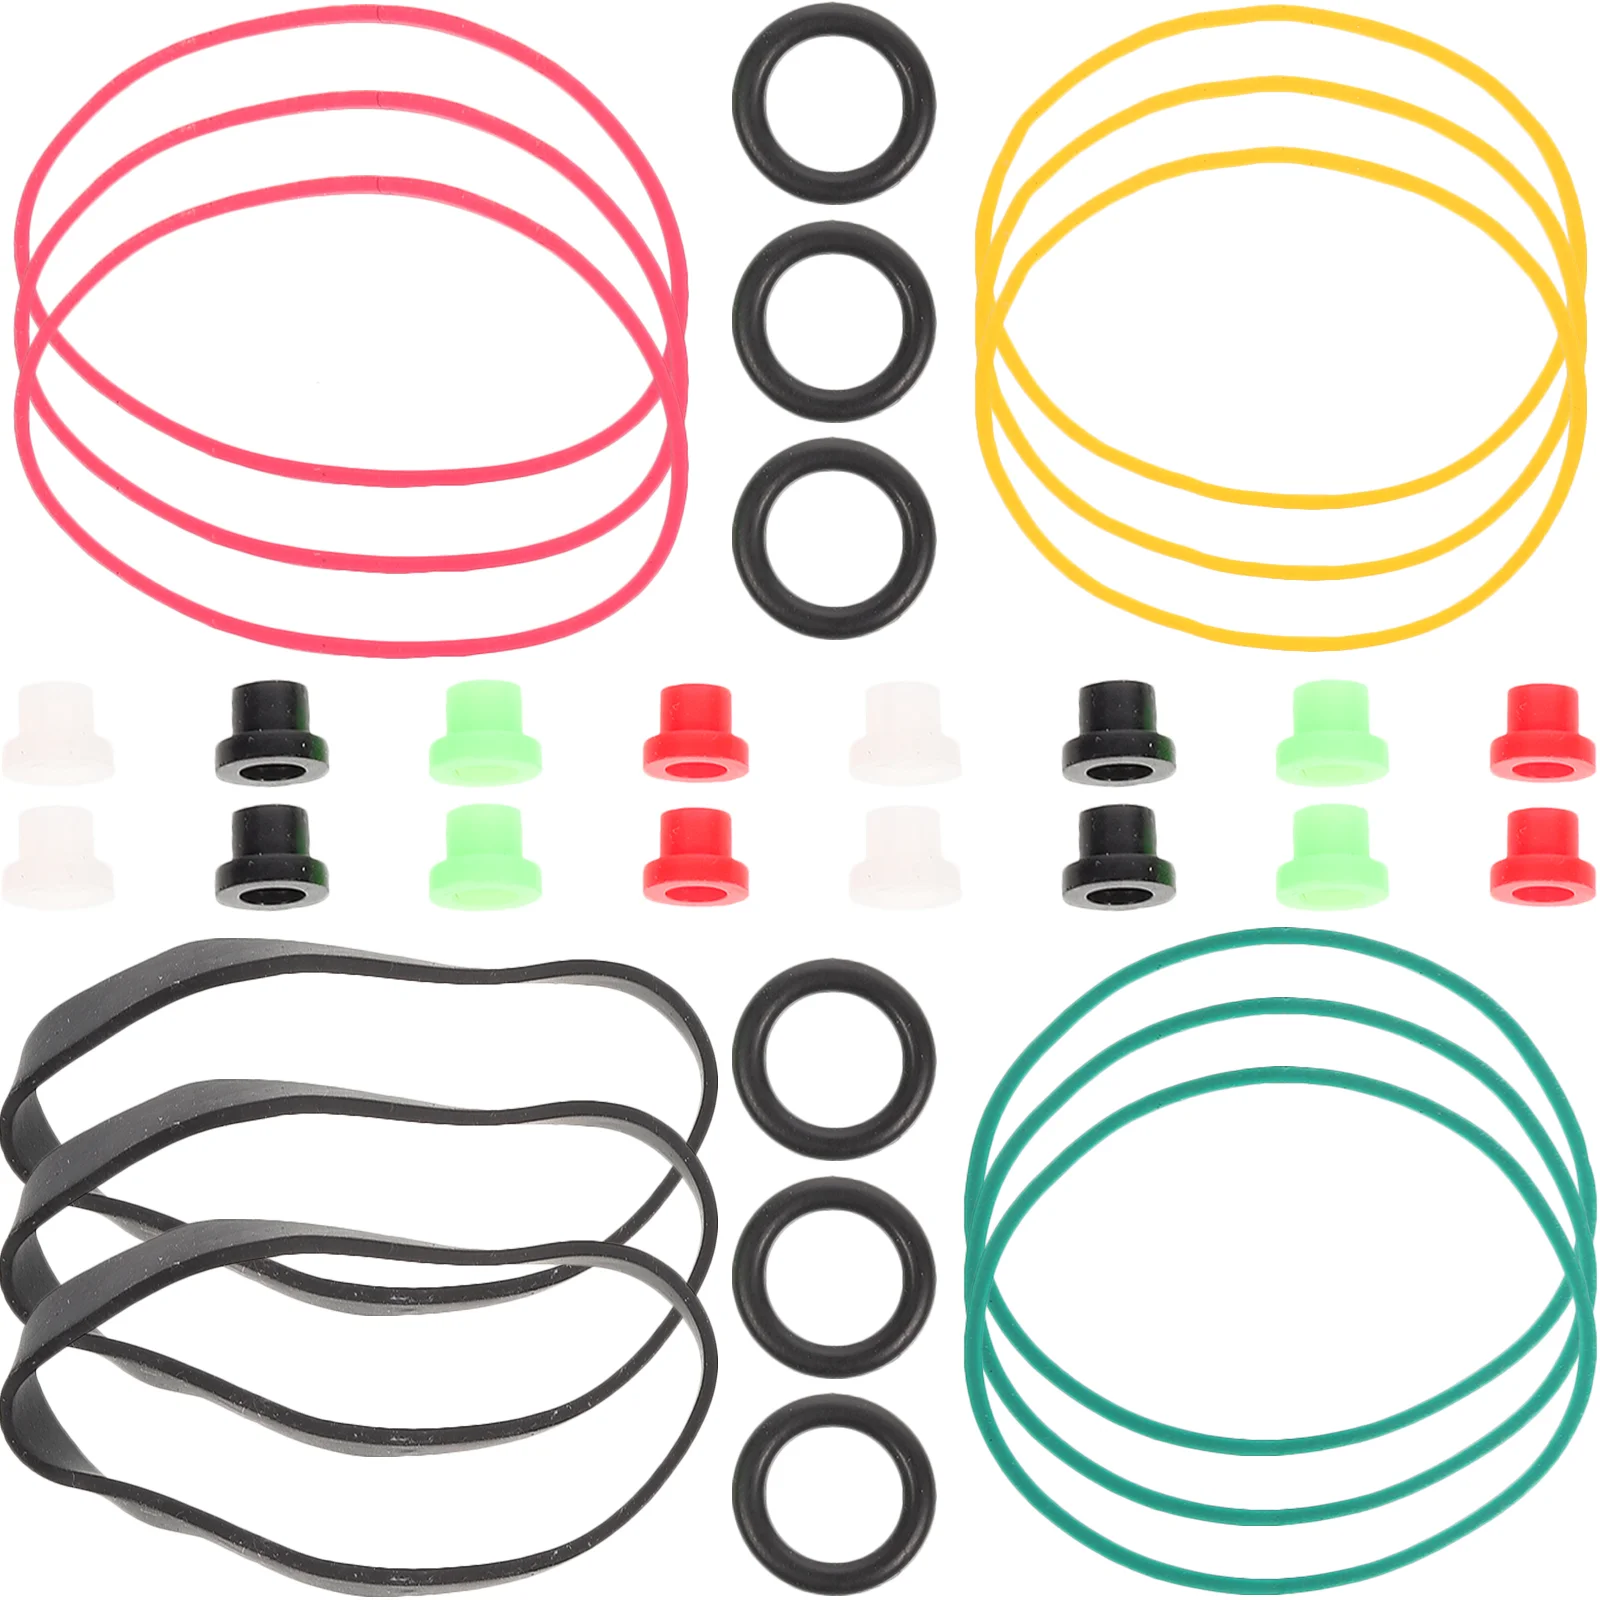 

270pcs Supplies Rubber Bands Pin Cushion Anti-vibration Apron Kit with Case (Random Color)